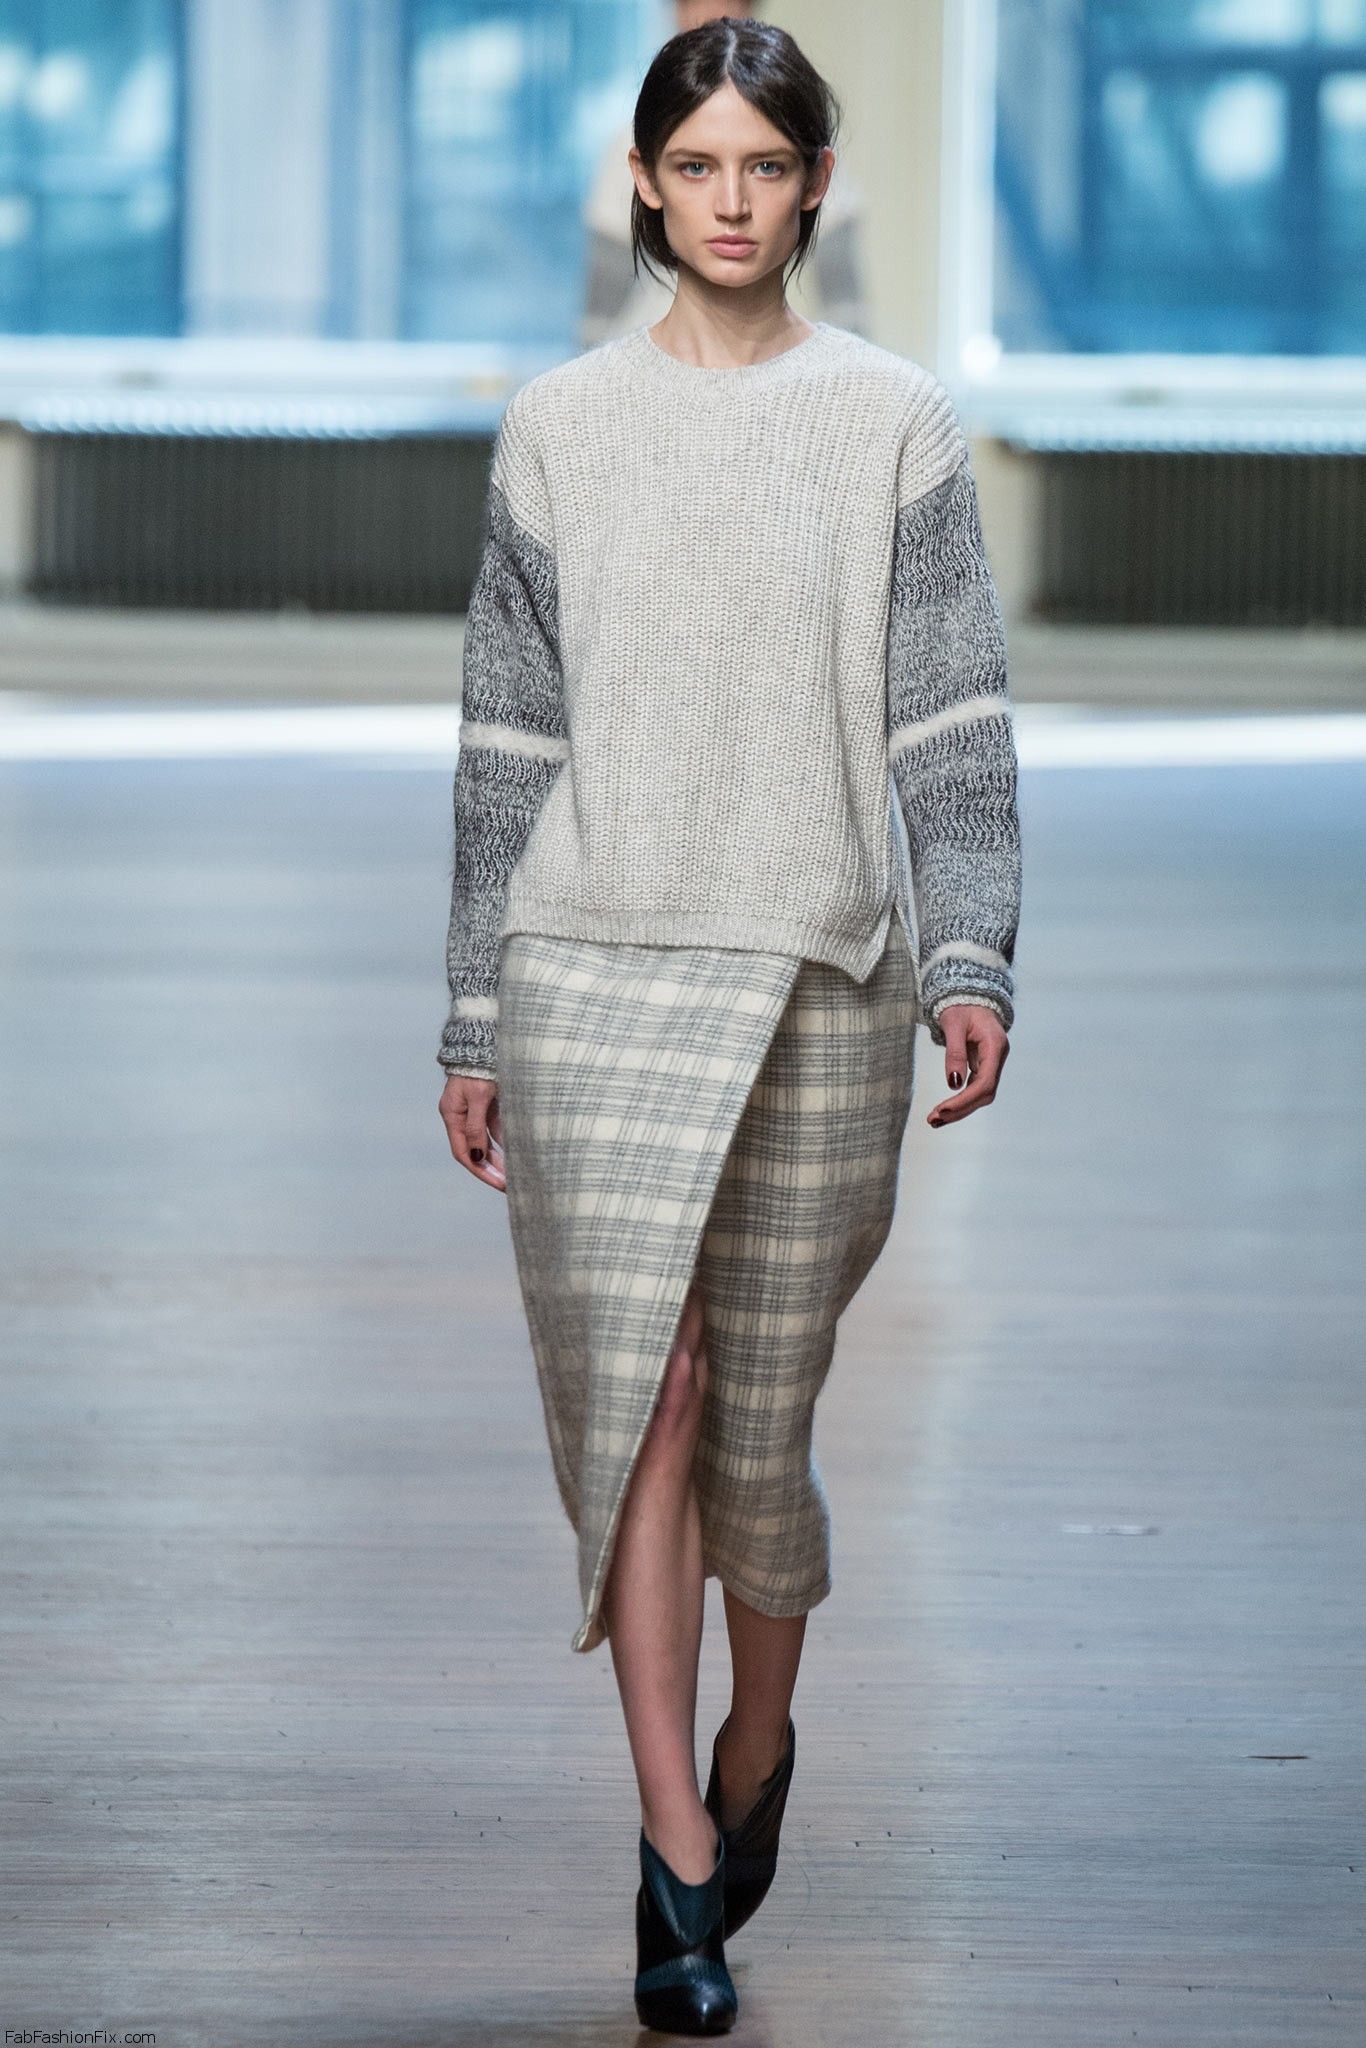 Yigal Azrouël fall/winter 2014 collection – New York fashion week | Fab ...